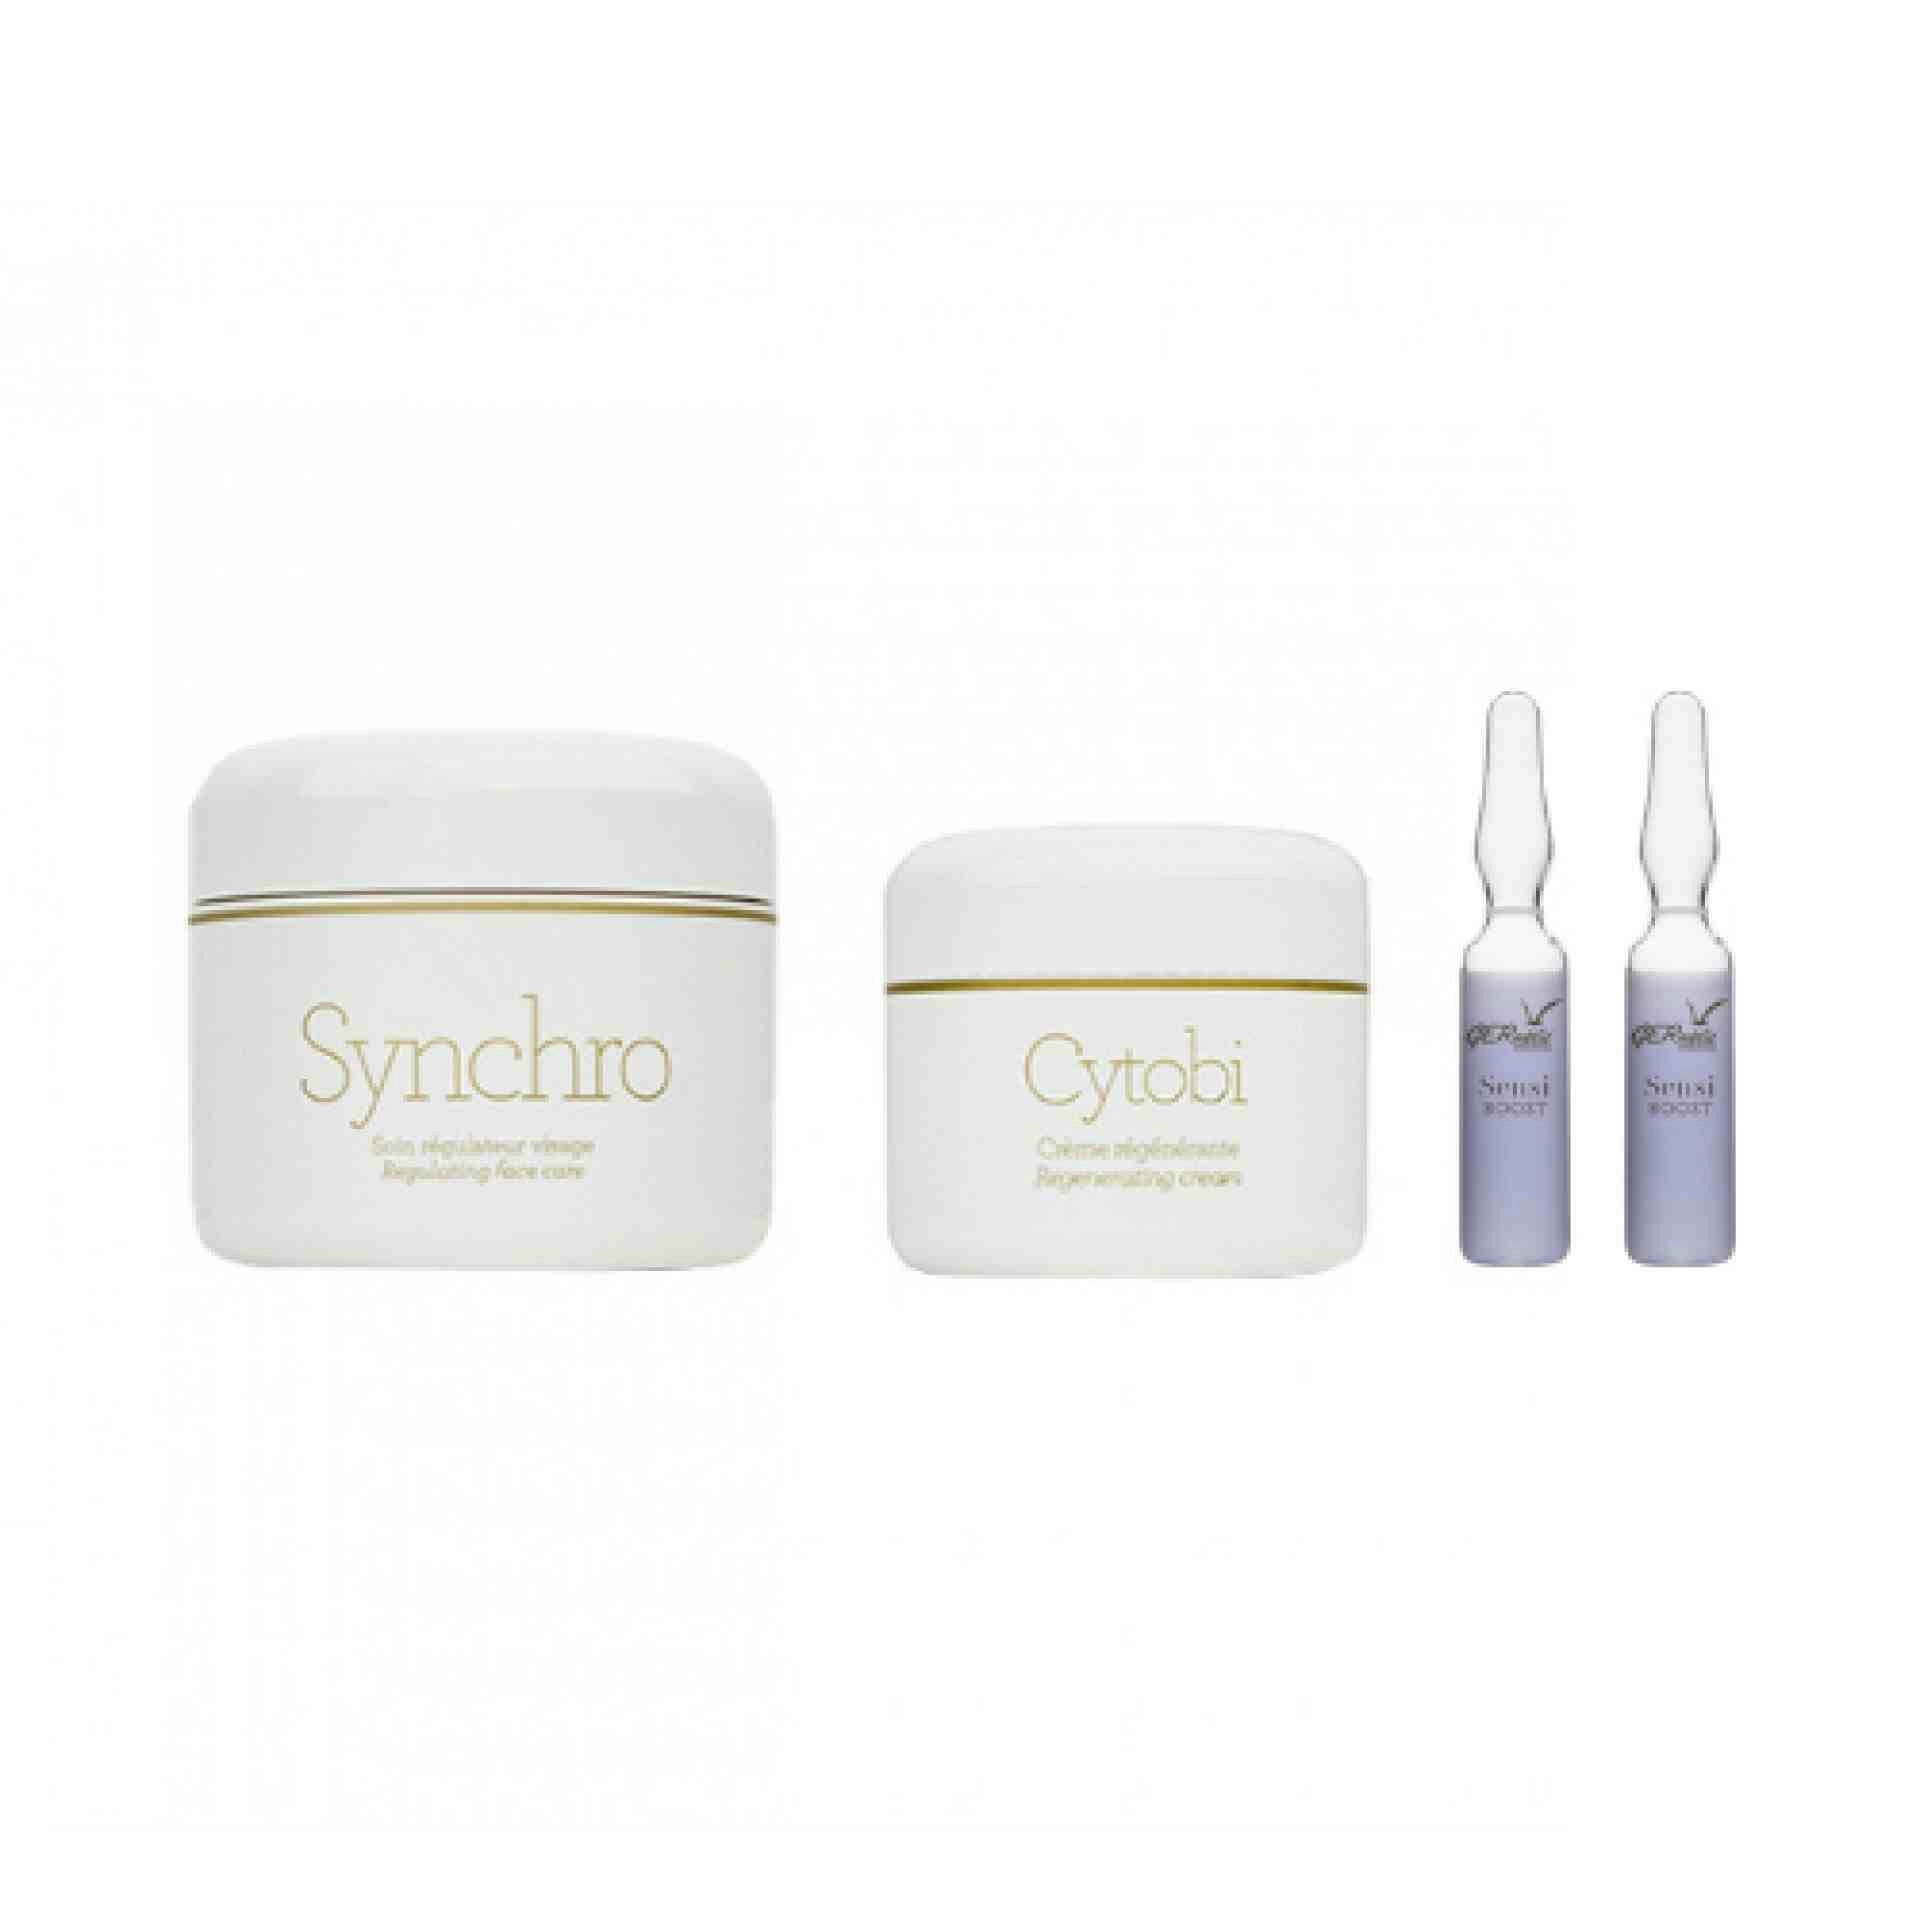 Pack Synchro 50ml + Cytobi 30ml + Sensi Boost 2x1ml | Antiedad - Gernétic ®